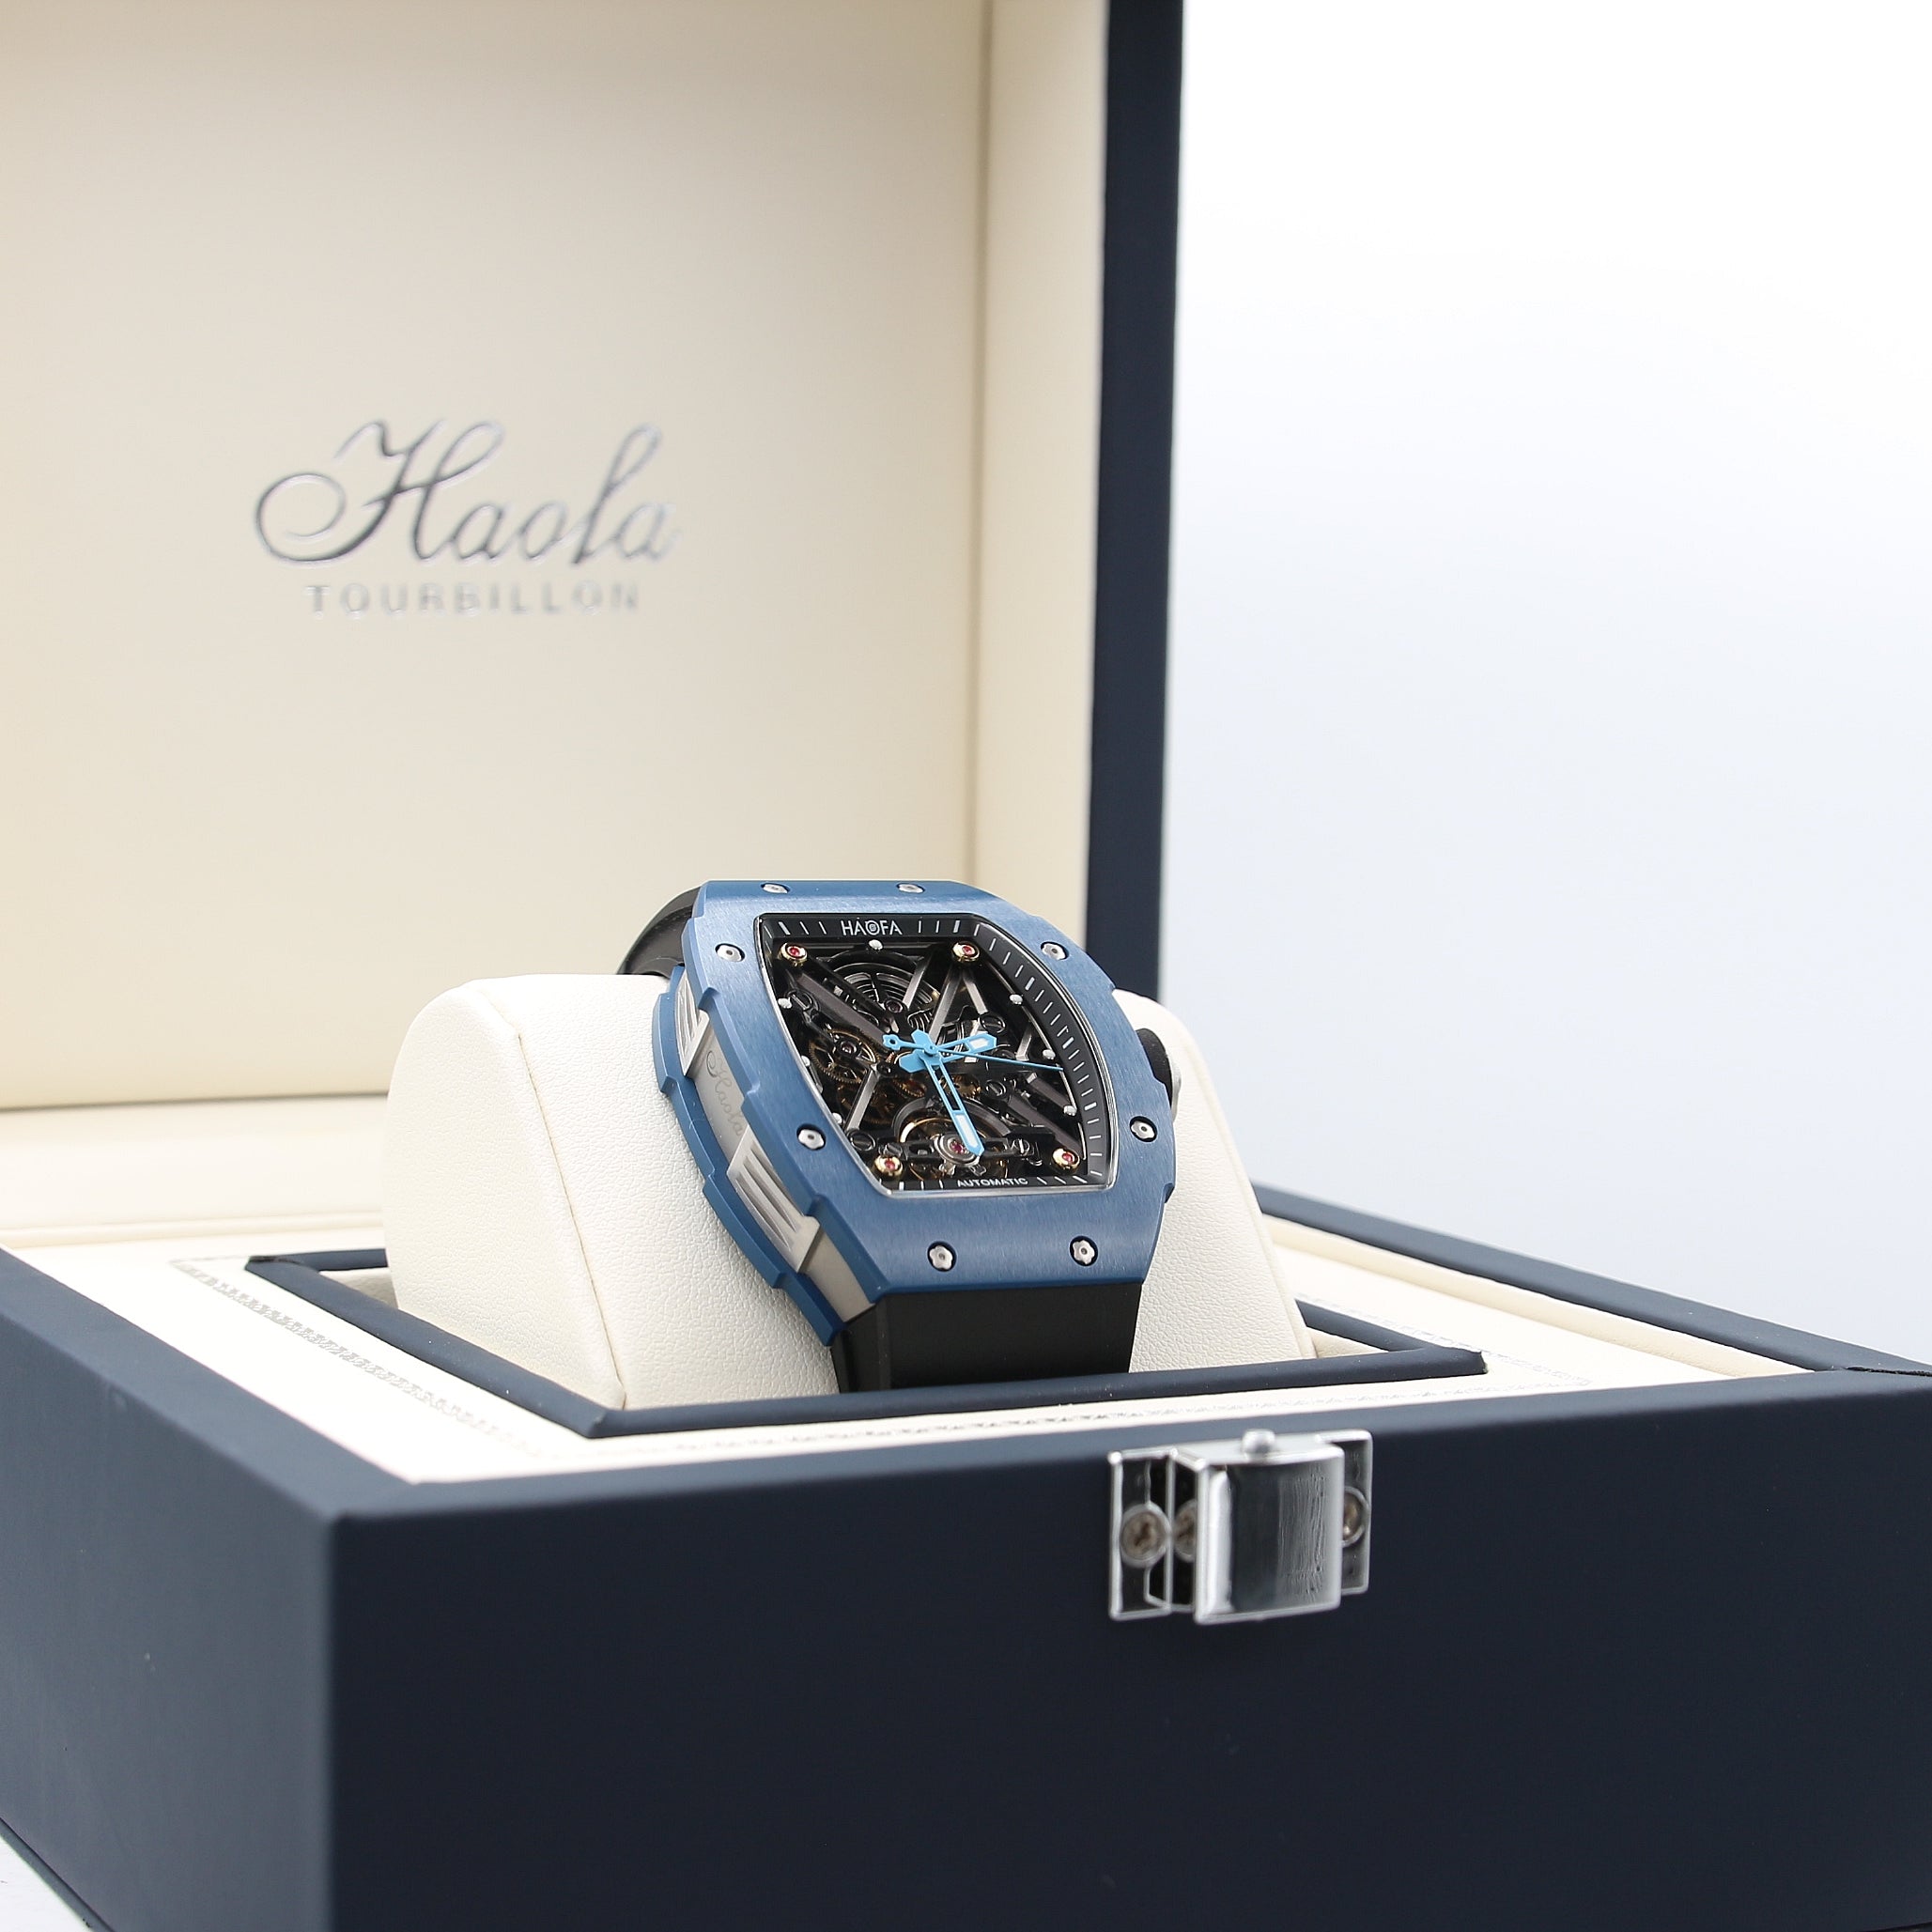 Haofa ref. 1988 Black/Blue - Ceramic Skeleton Mechanical Watch